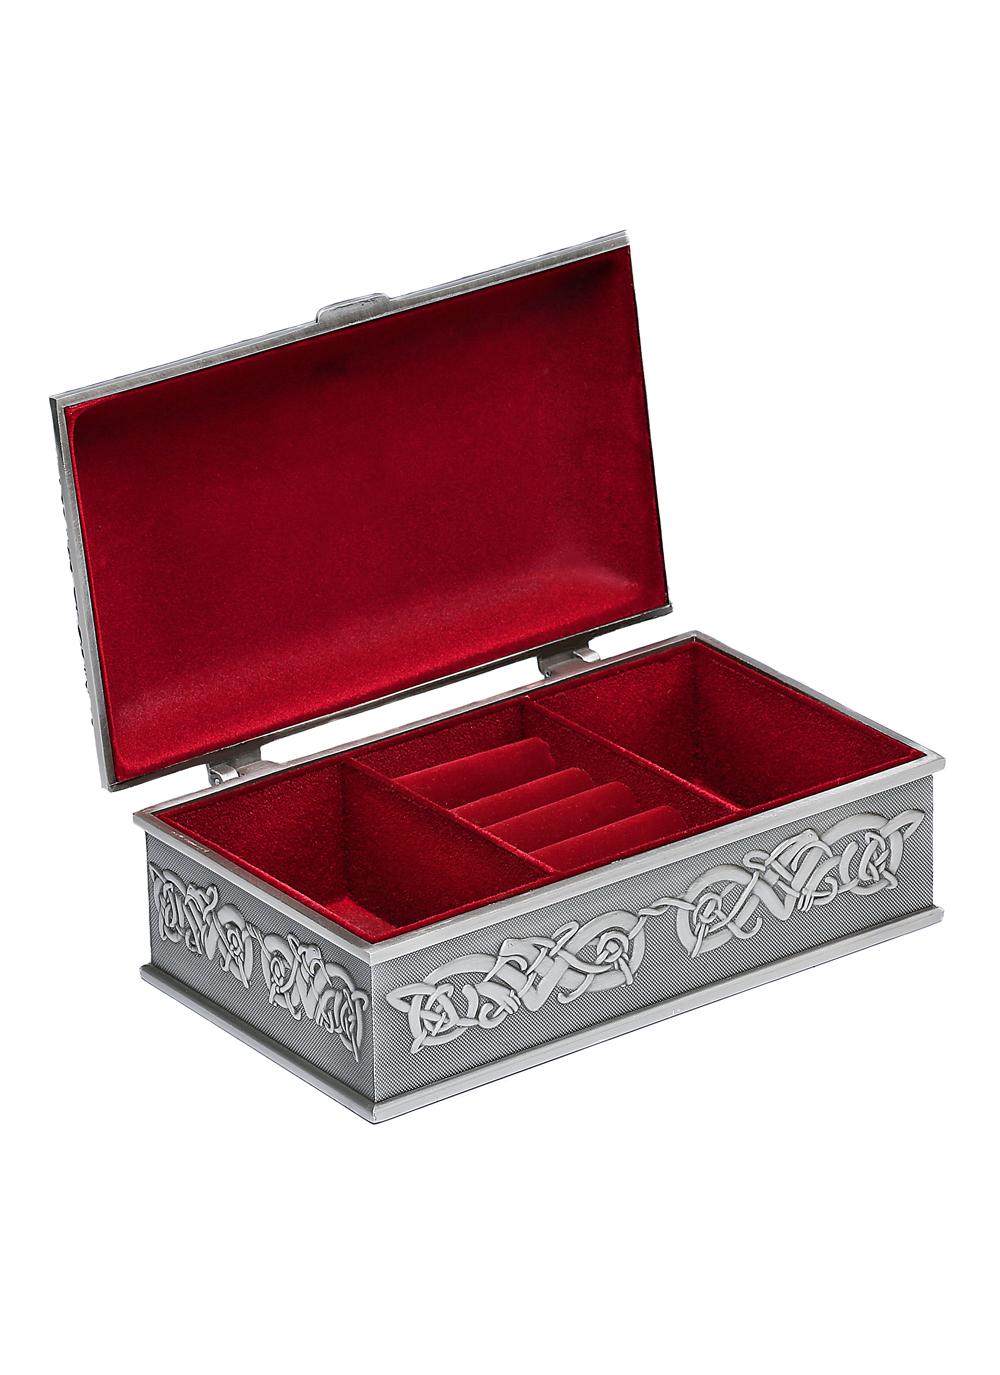 Claddagh Ring Oak Jewellery Box 6x4 Photo Insert Personalised Friendship Gift 74 